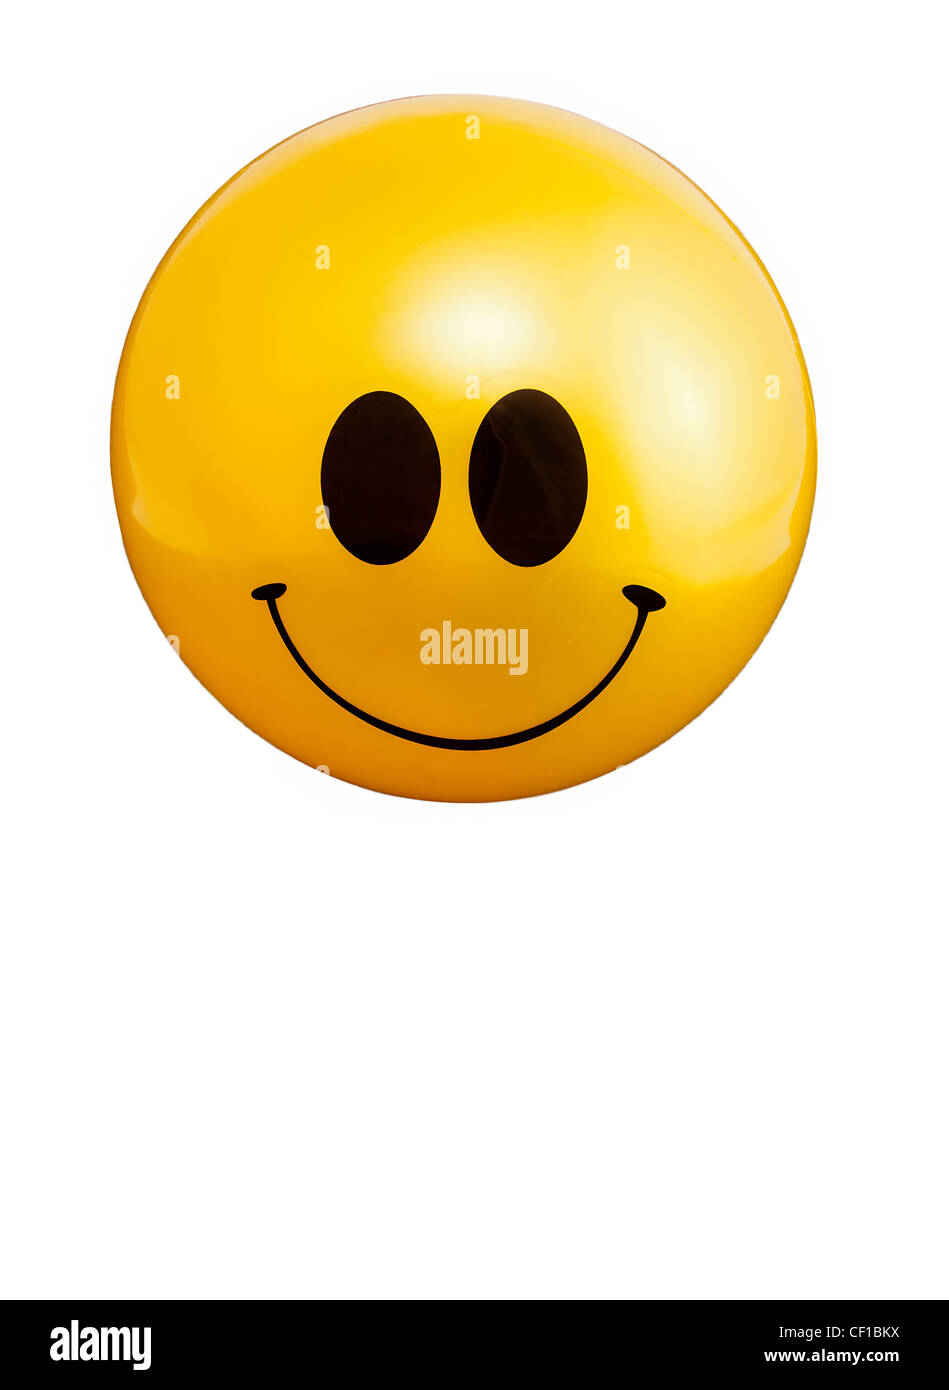 Hunting Ball Creepy Emoji by Faxxx